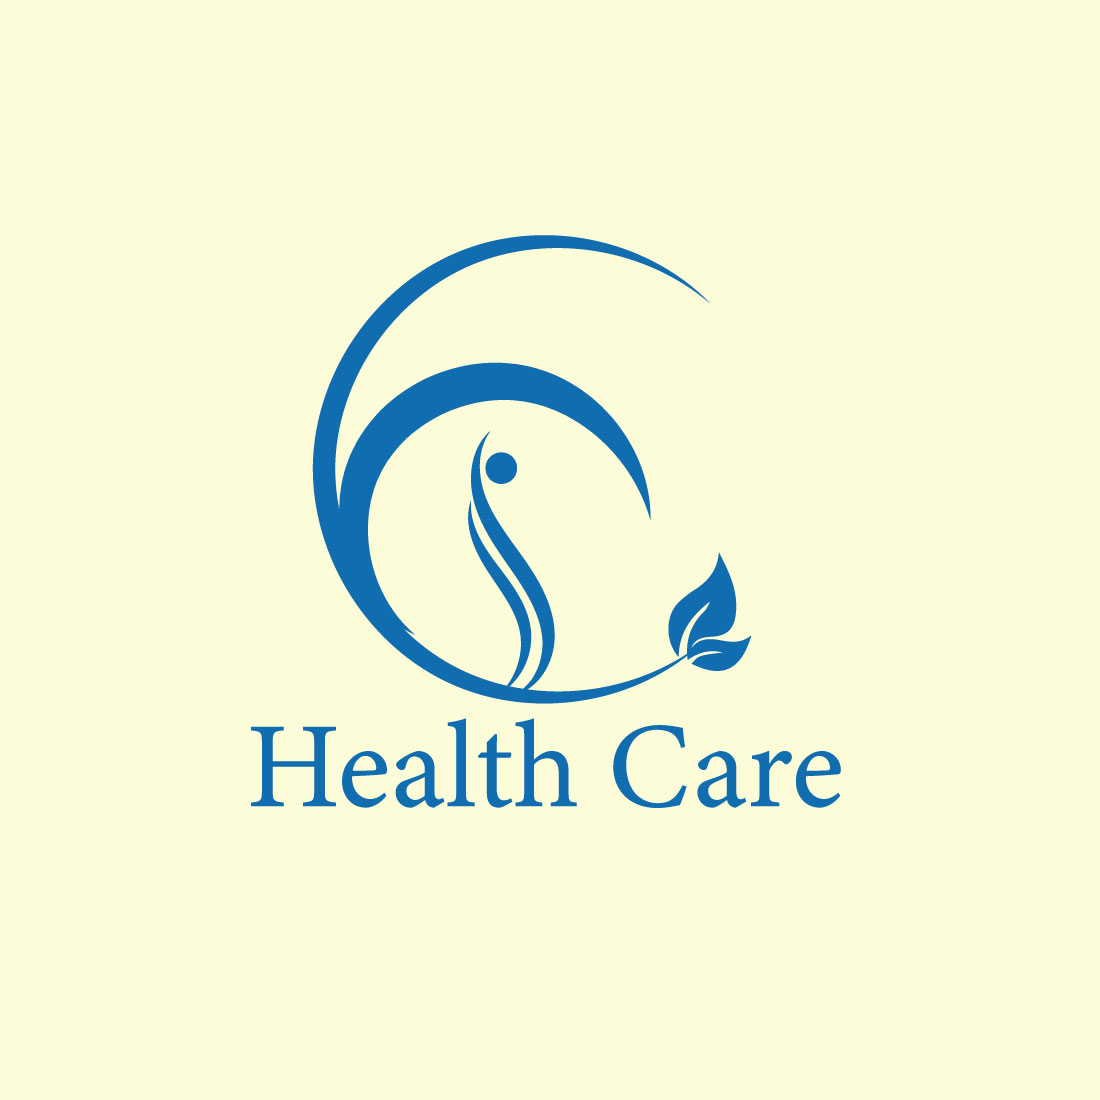 Free Wellness Logo preview image.